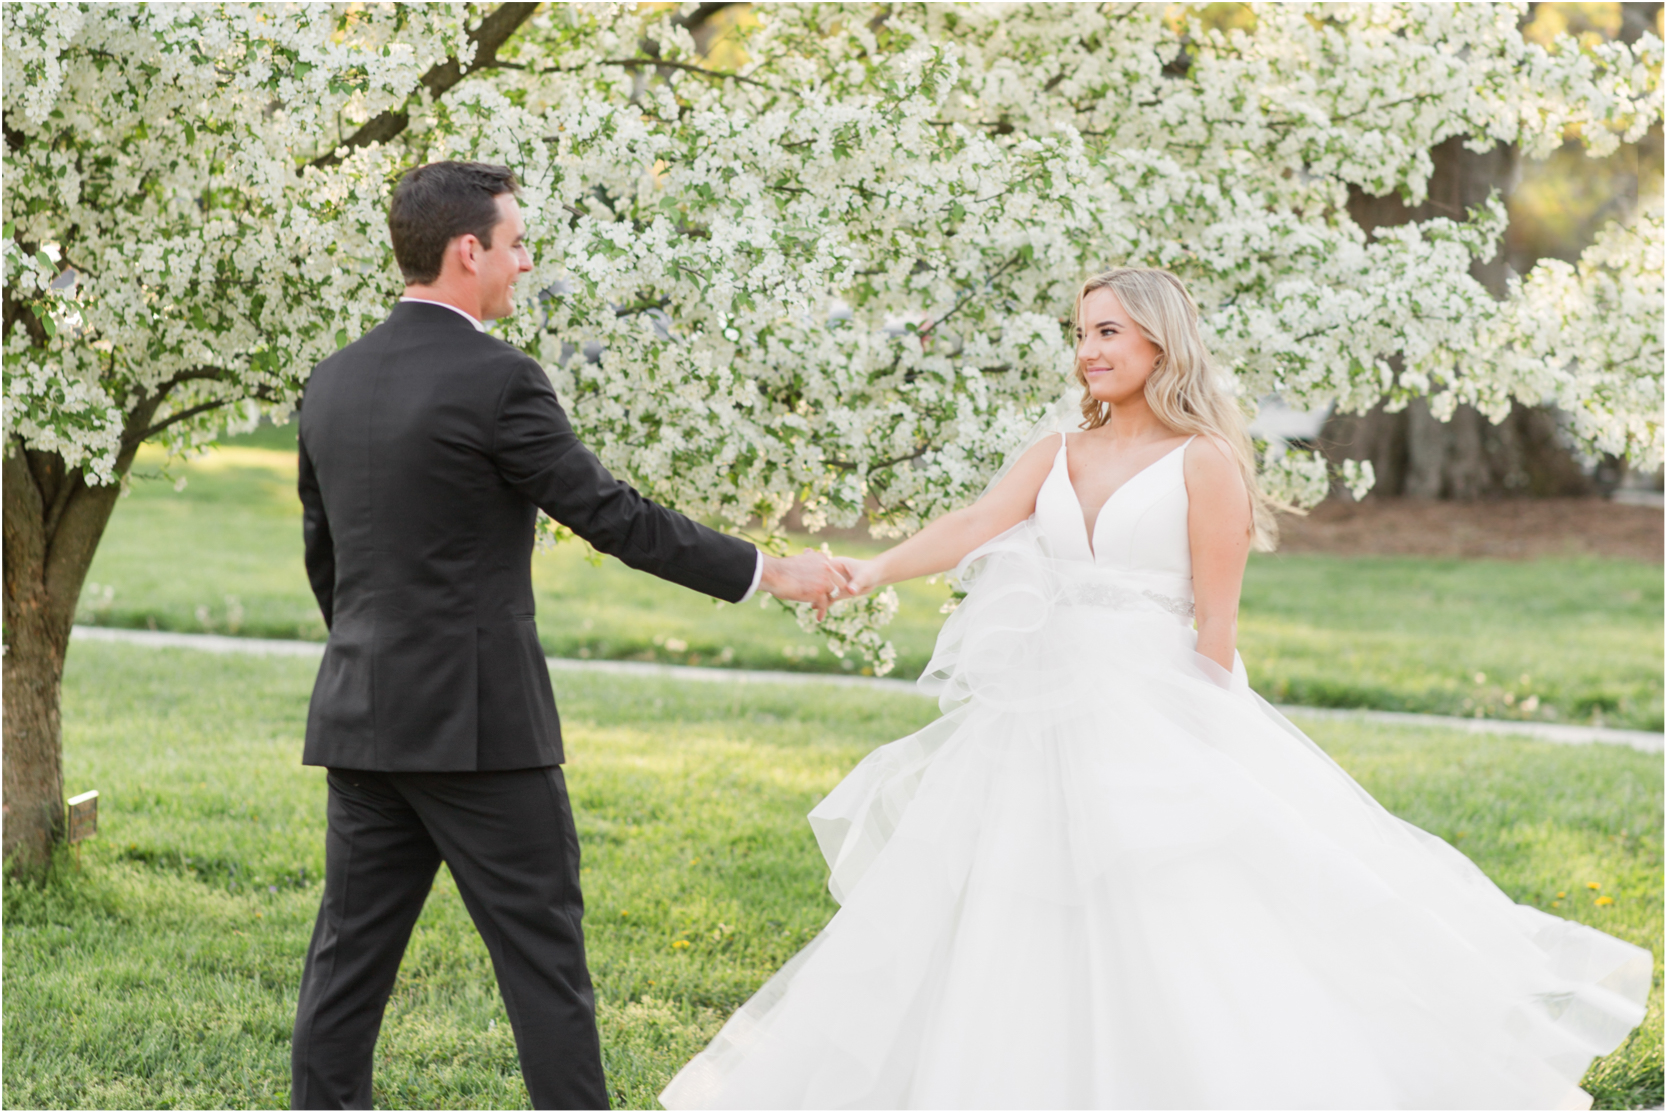 Olmsted Spring Wedding blooming trees Bride and groom portraits Louisville Kentucky